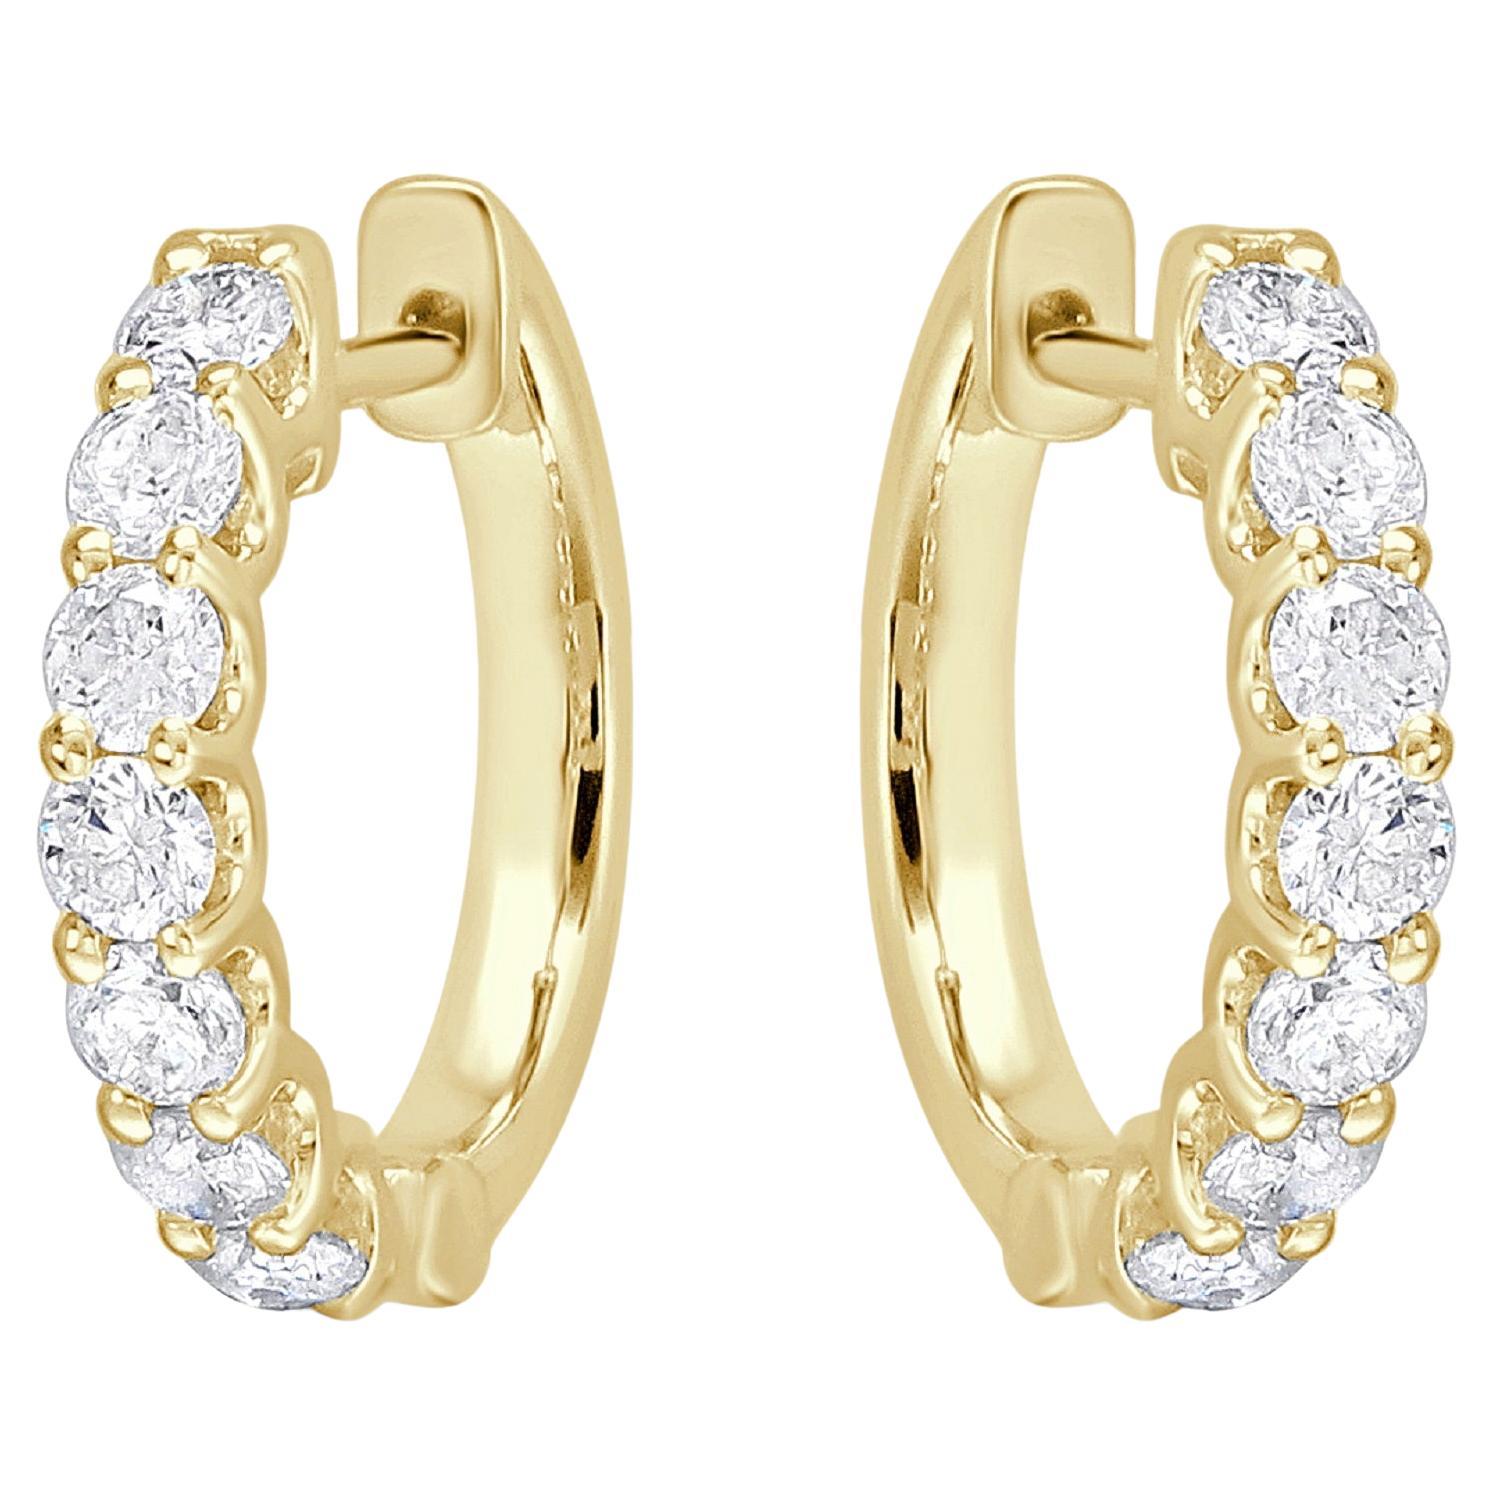 Details about   22k 23k 24k Yellow Gold Plated Women Round Beads Diamond Cut Hoop Earrings 18 mm 